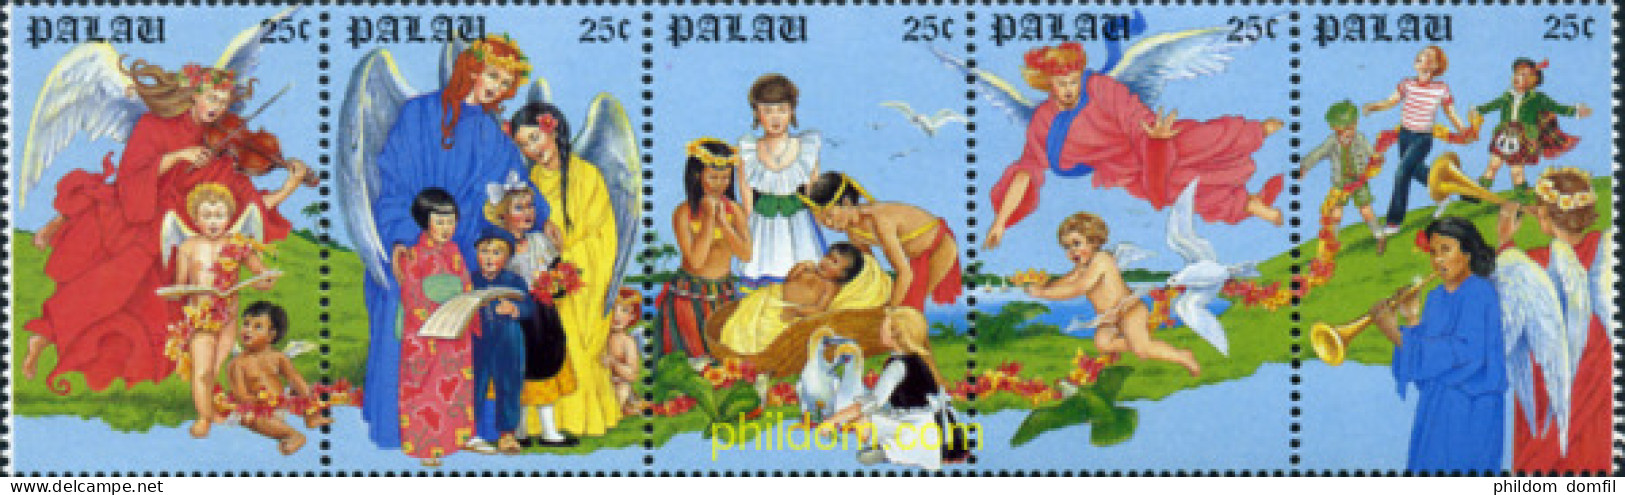 349779 MNH PALAU 1988 NAVIDAD - Palau